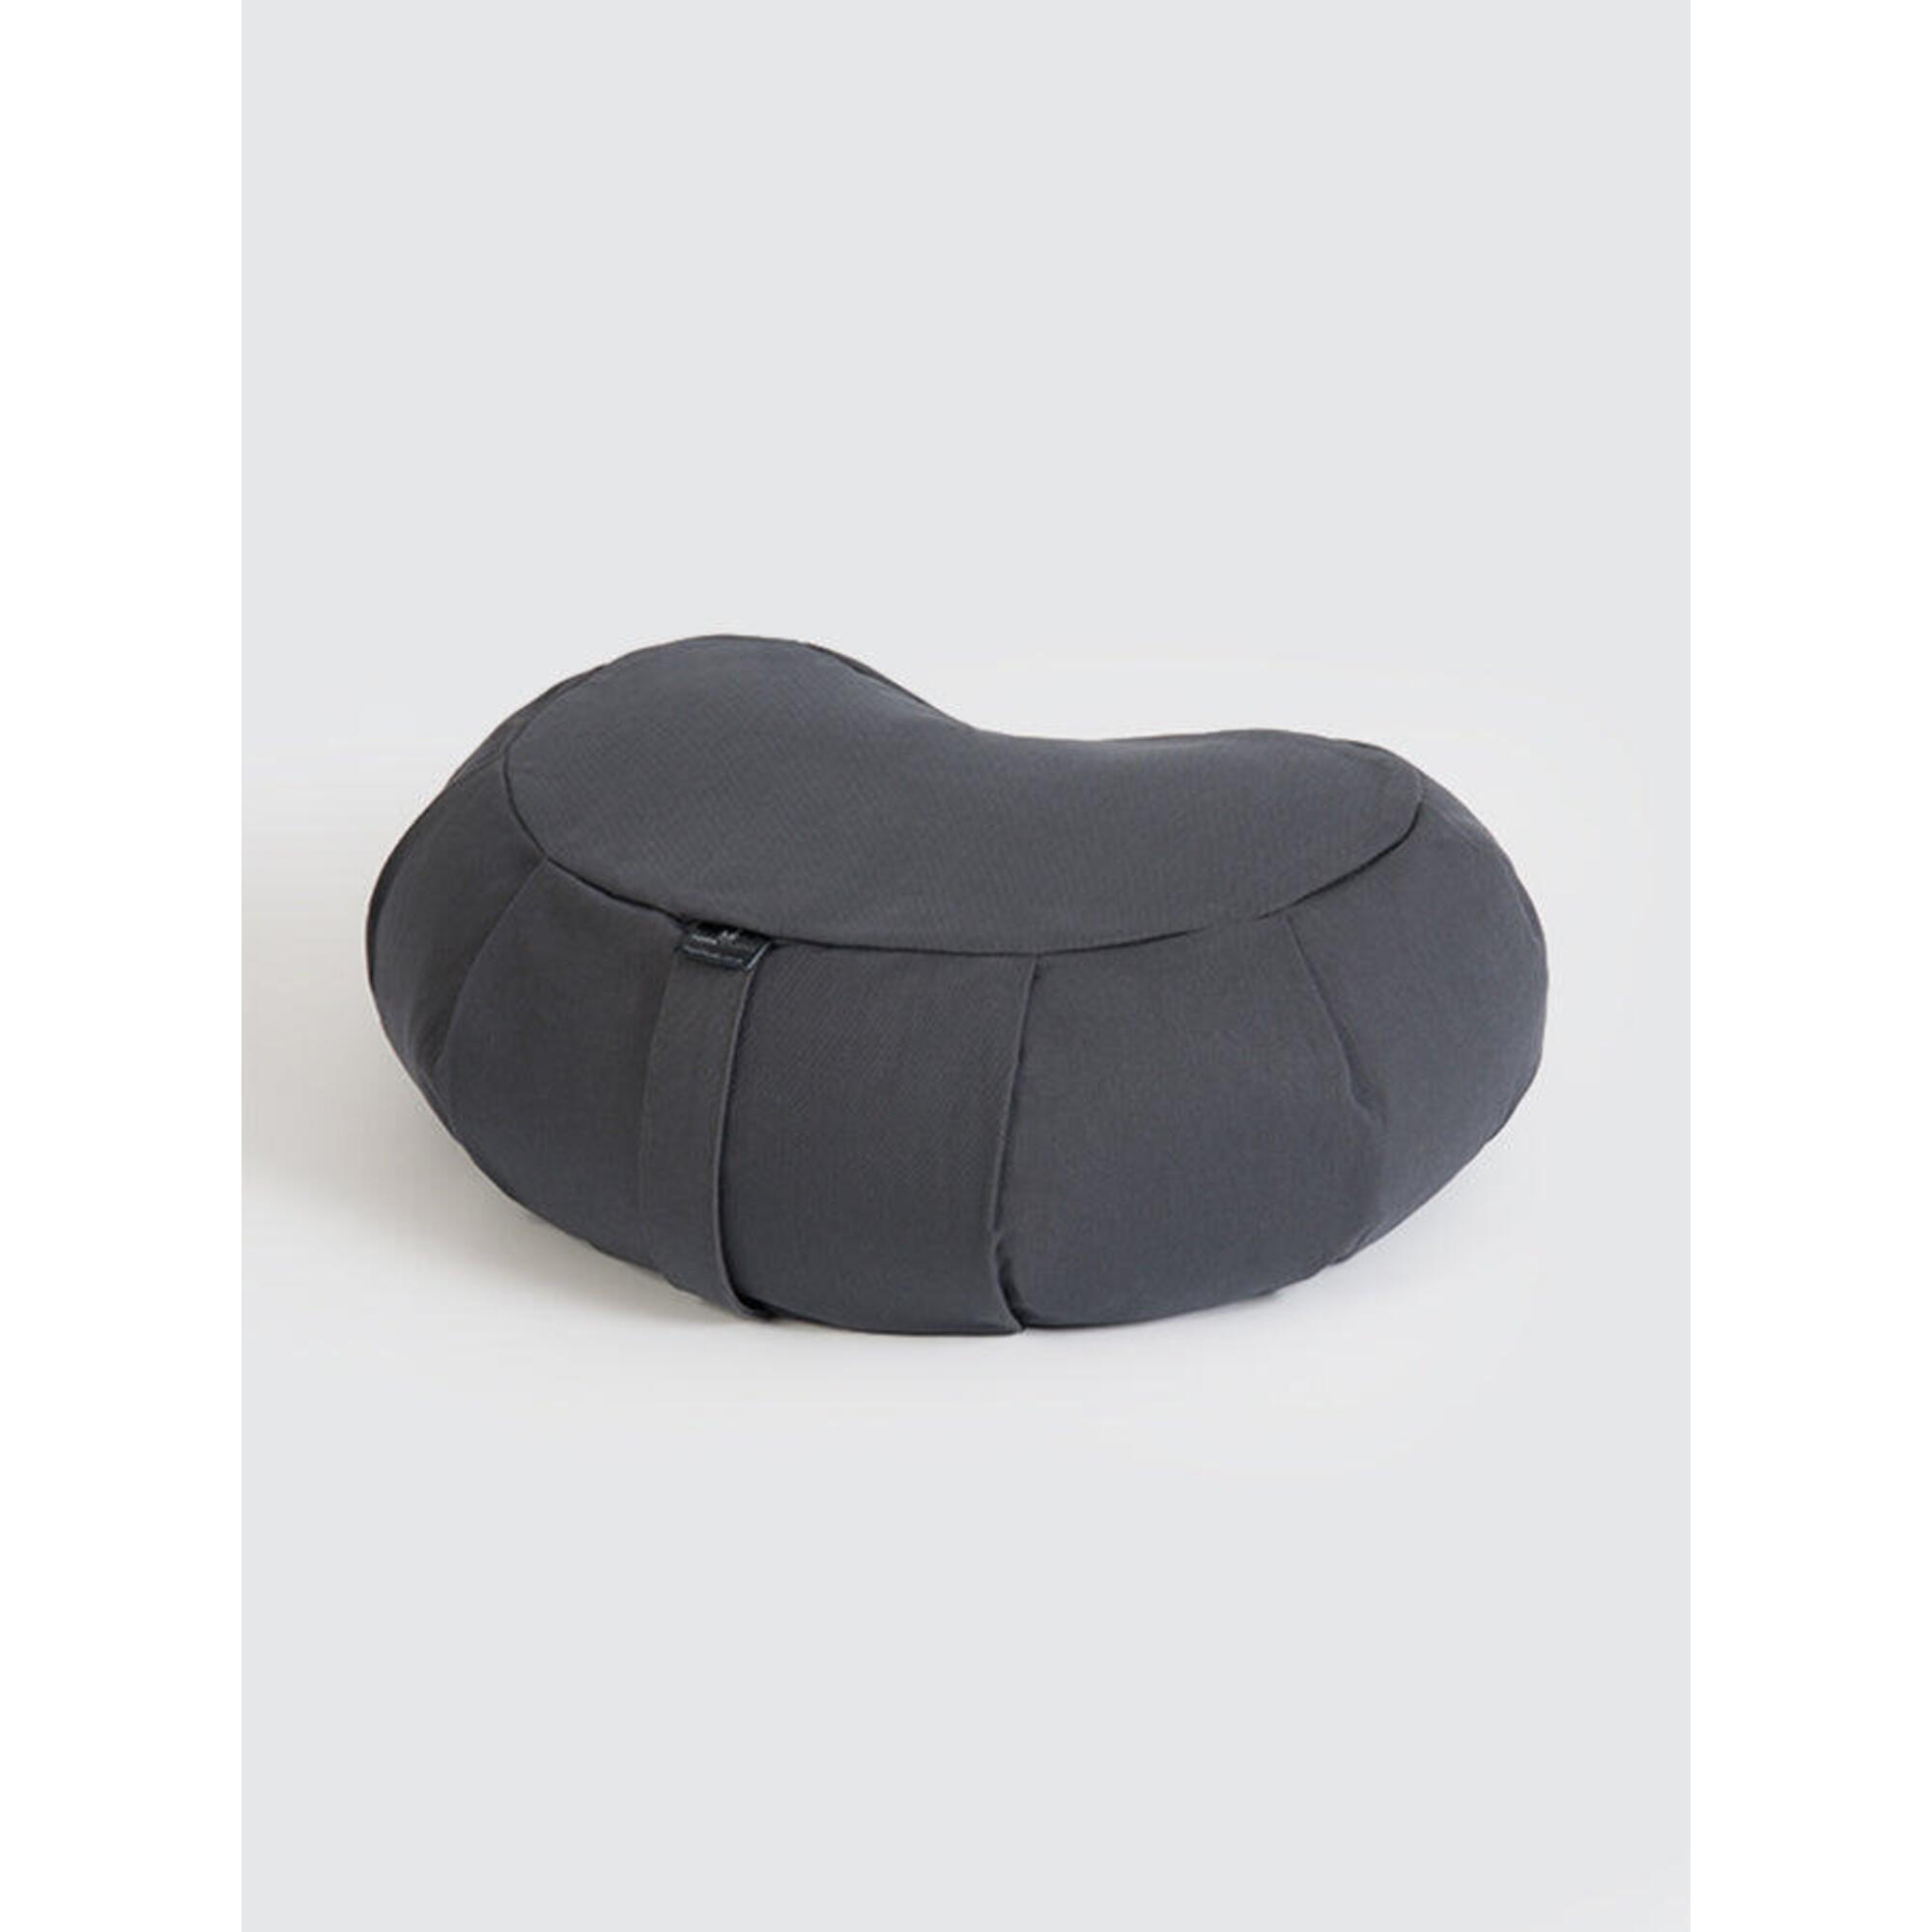 Yoga Studio EU Organic Buckwheat Zafu Crescent Cushion - Grey 1/3